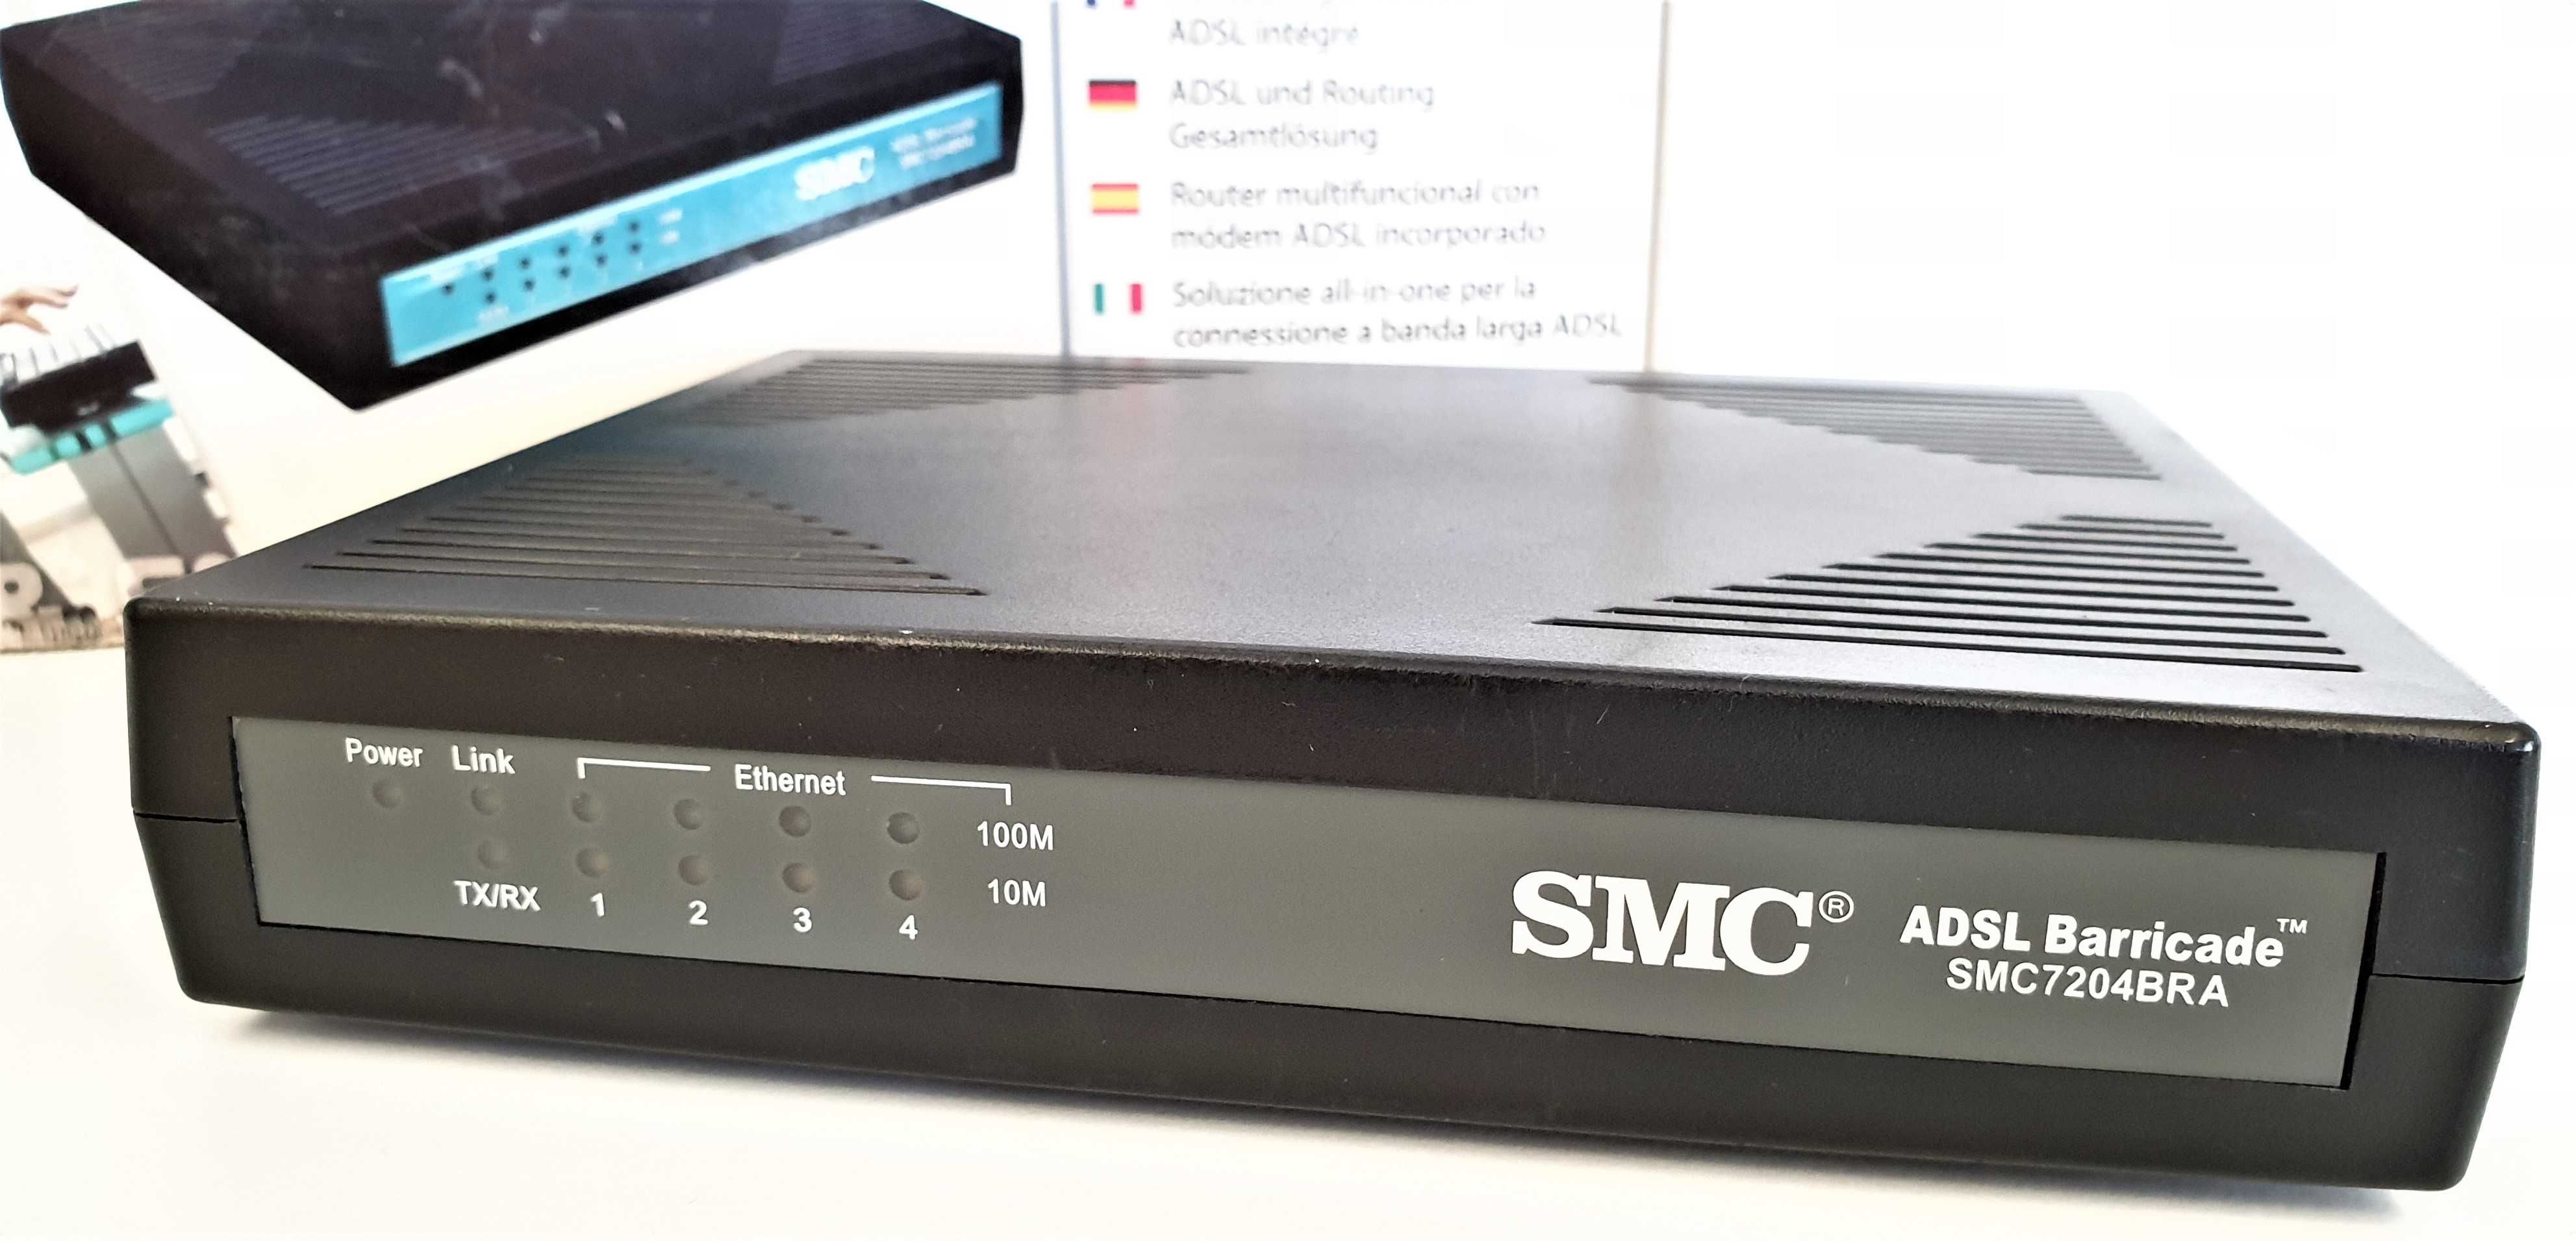 SMC Barricade SMC7204BRA - router - ADSL modem